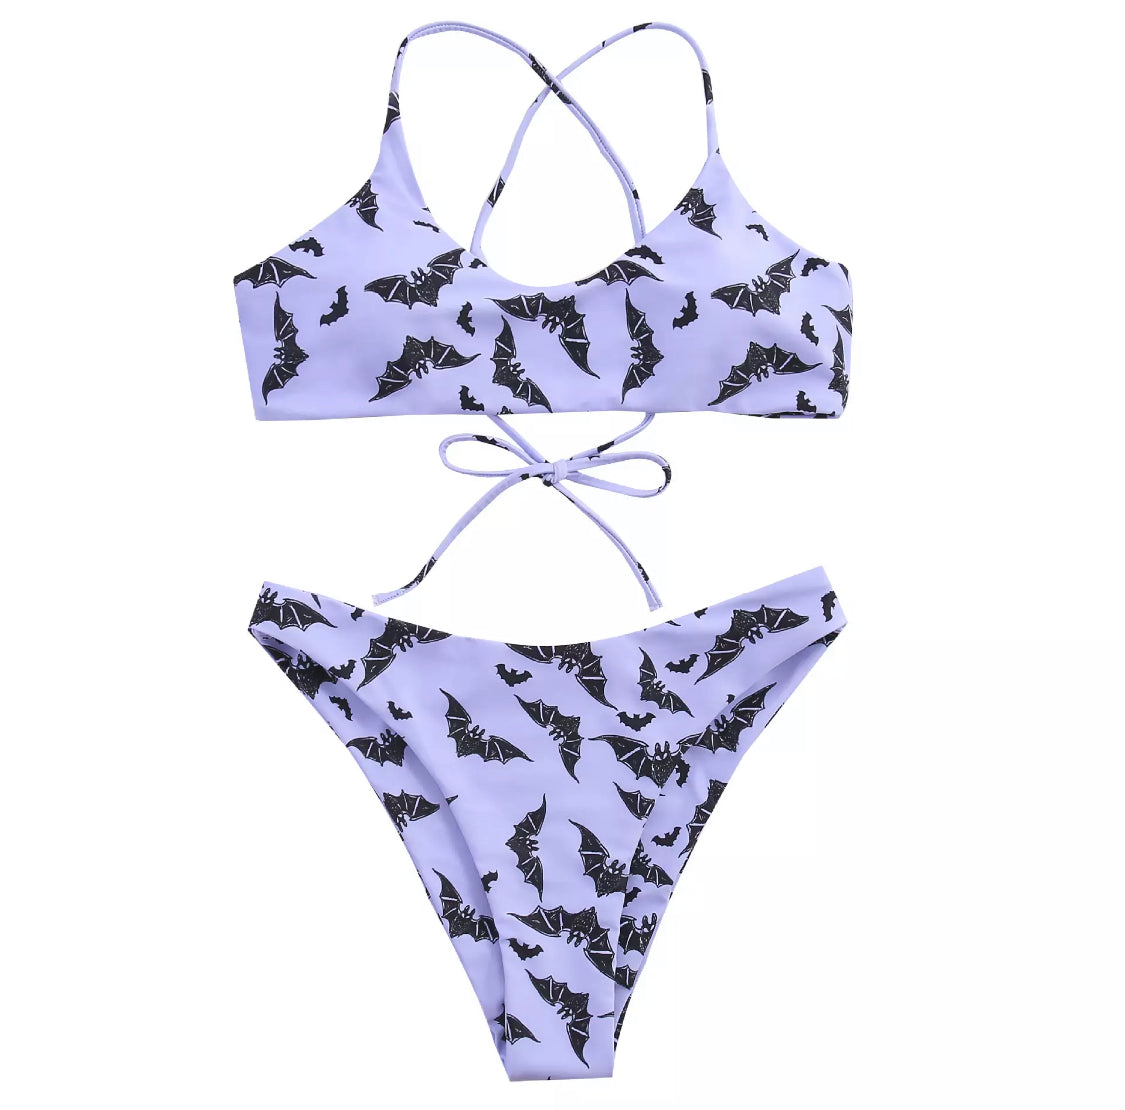 Bat Bikini Set